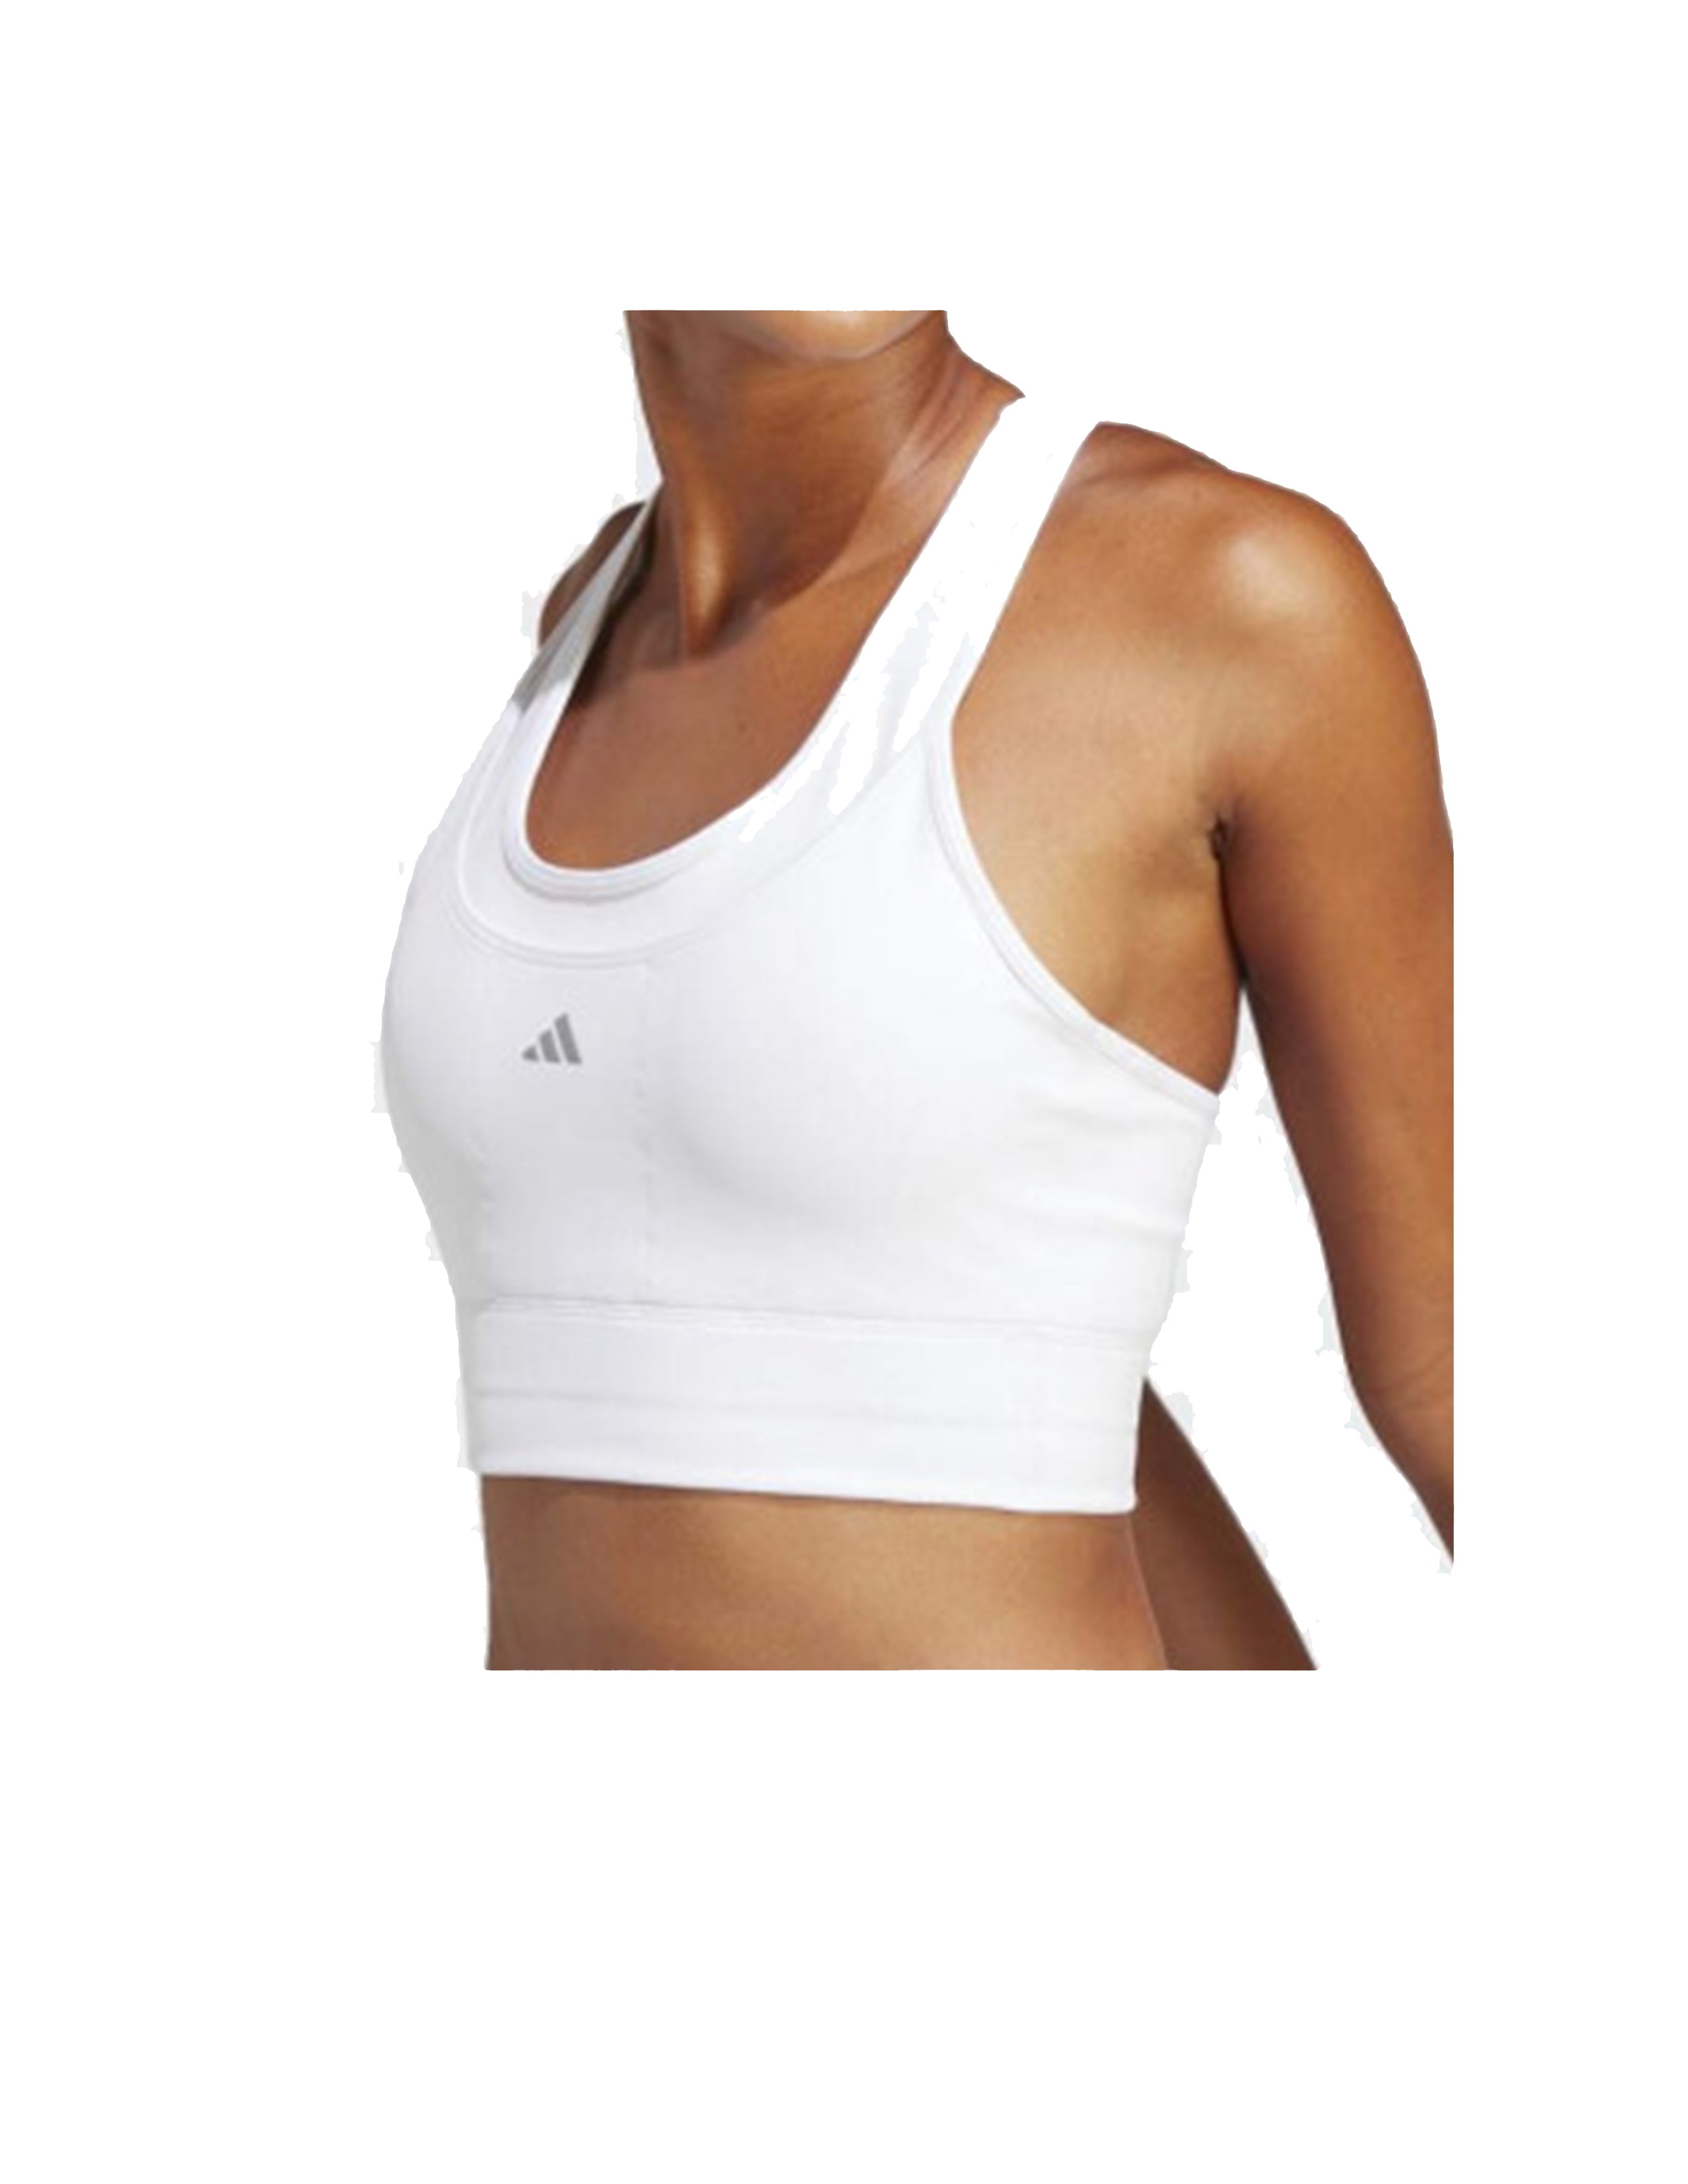 Adidas Women's White Sport Support Running Pocket Bra Size LDD (38) 